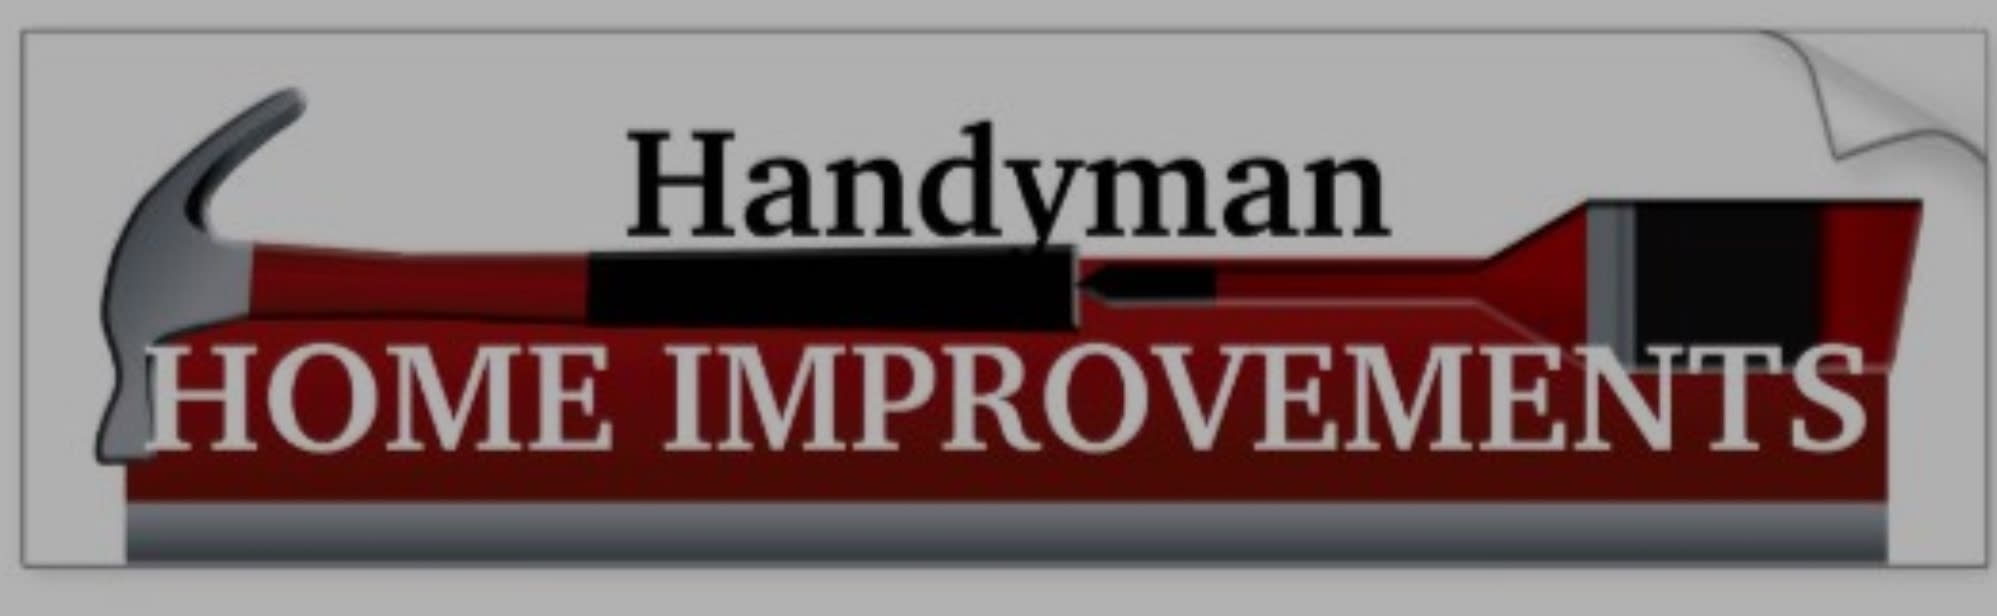 Handyman Home Improvements